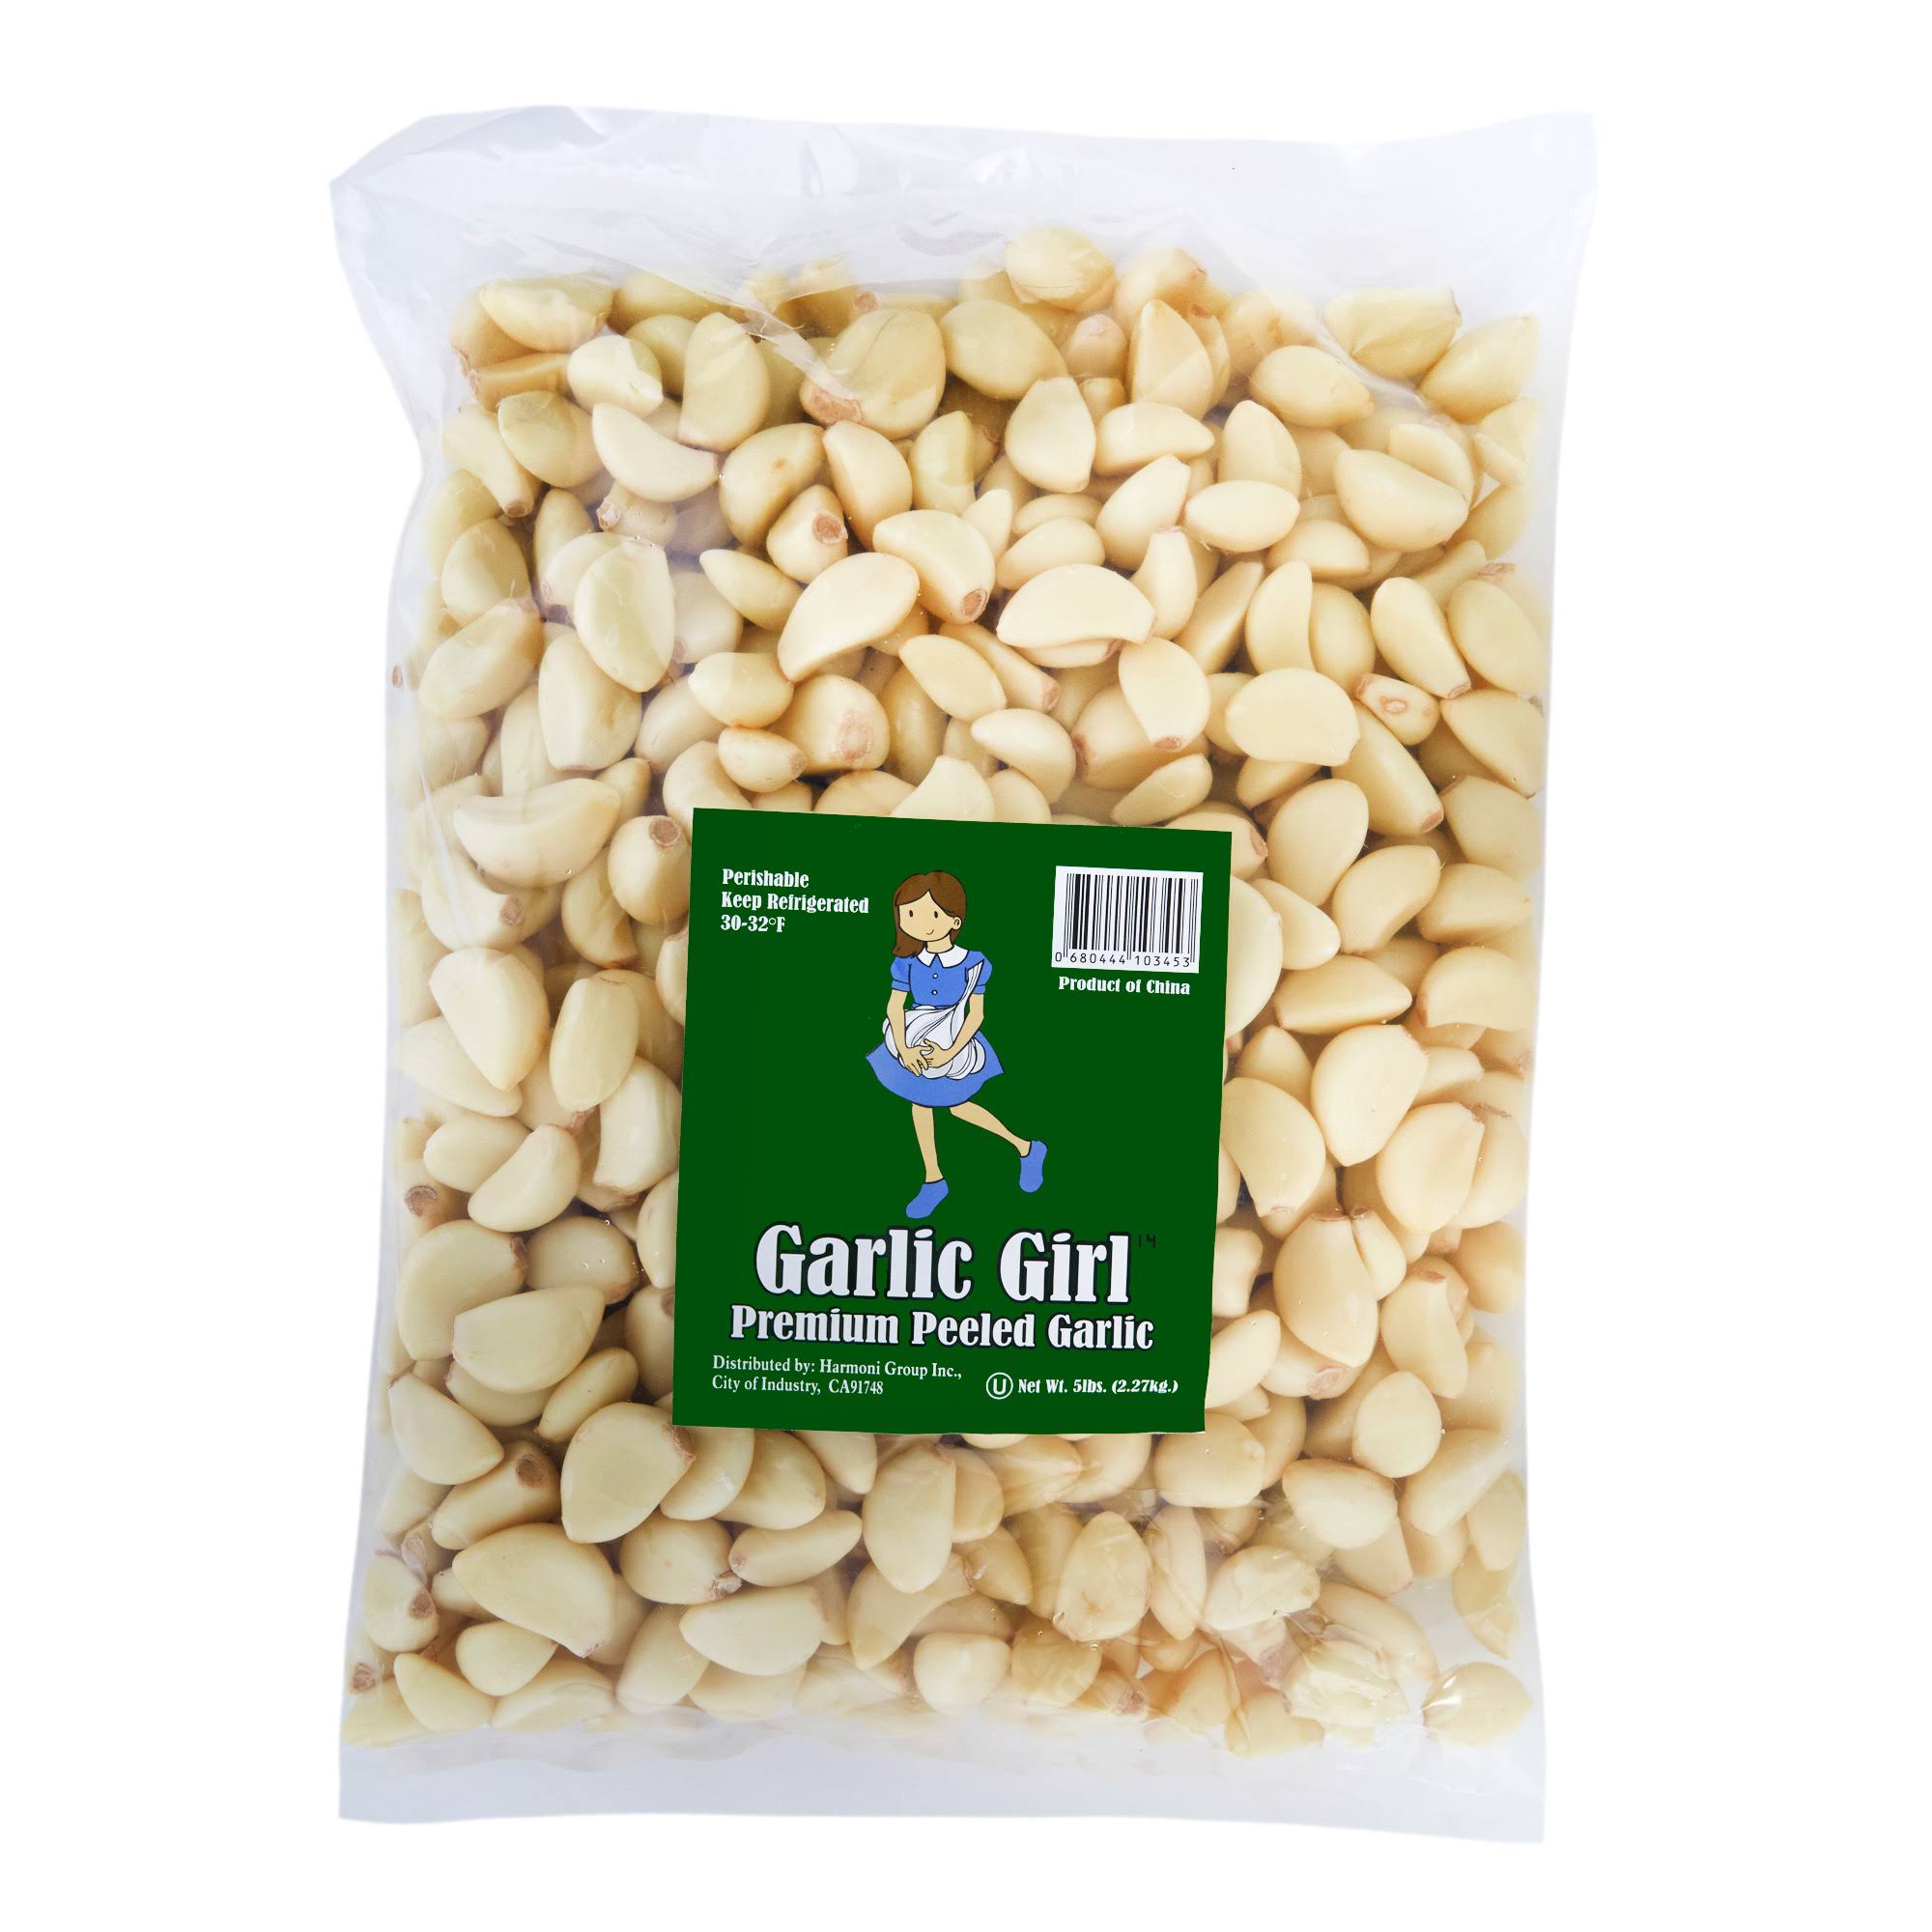 Garlic Girl Premium Peeled Garlic - 5 lb bag